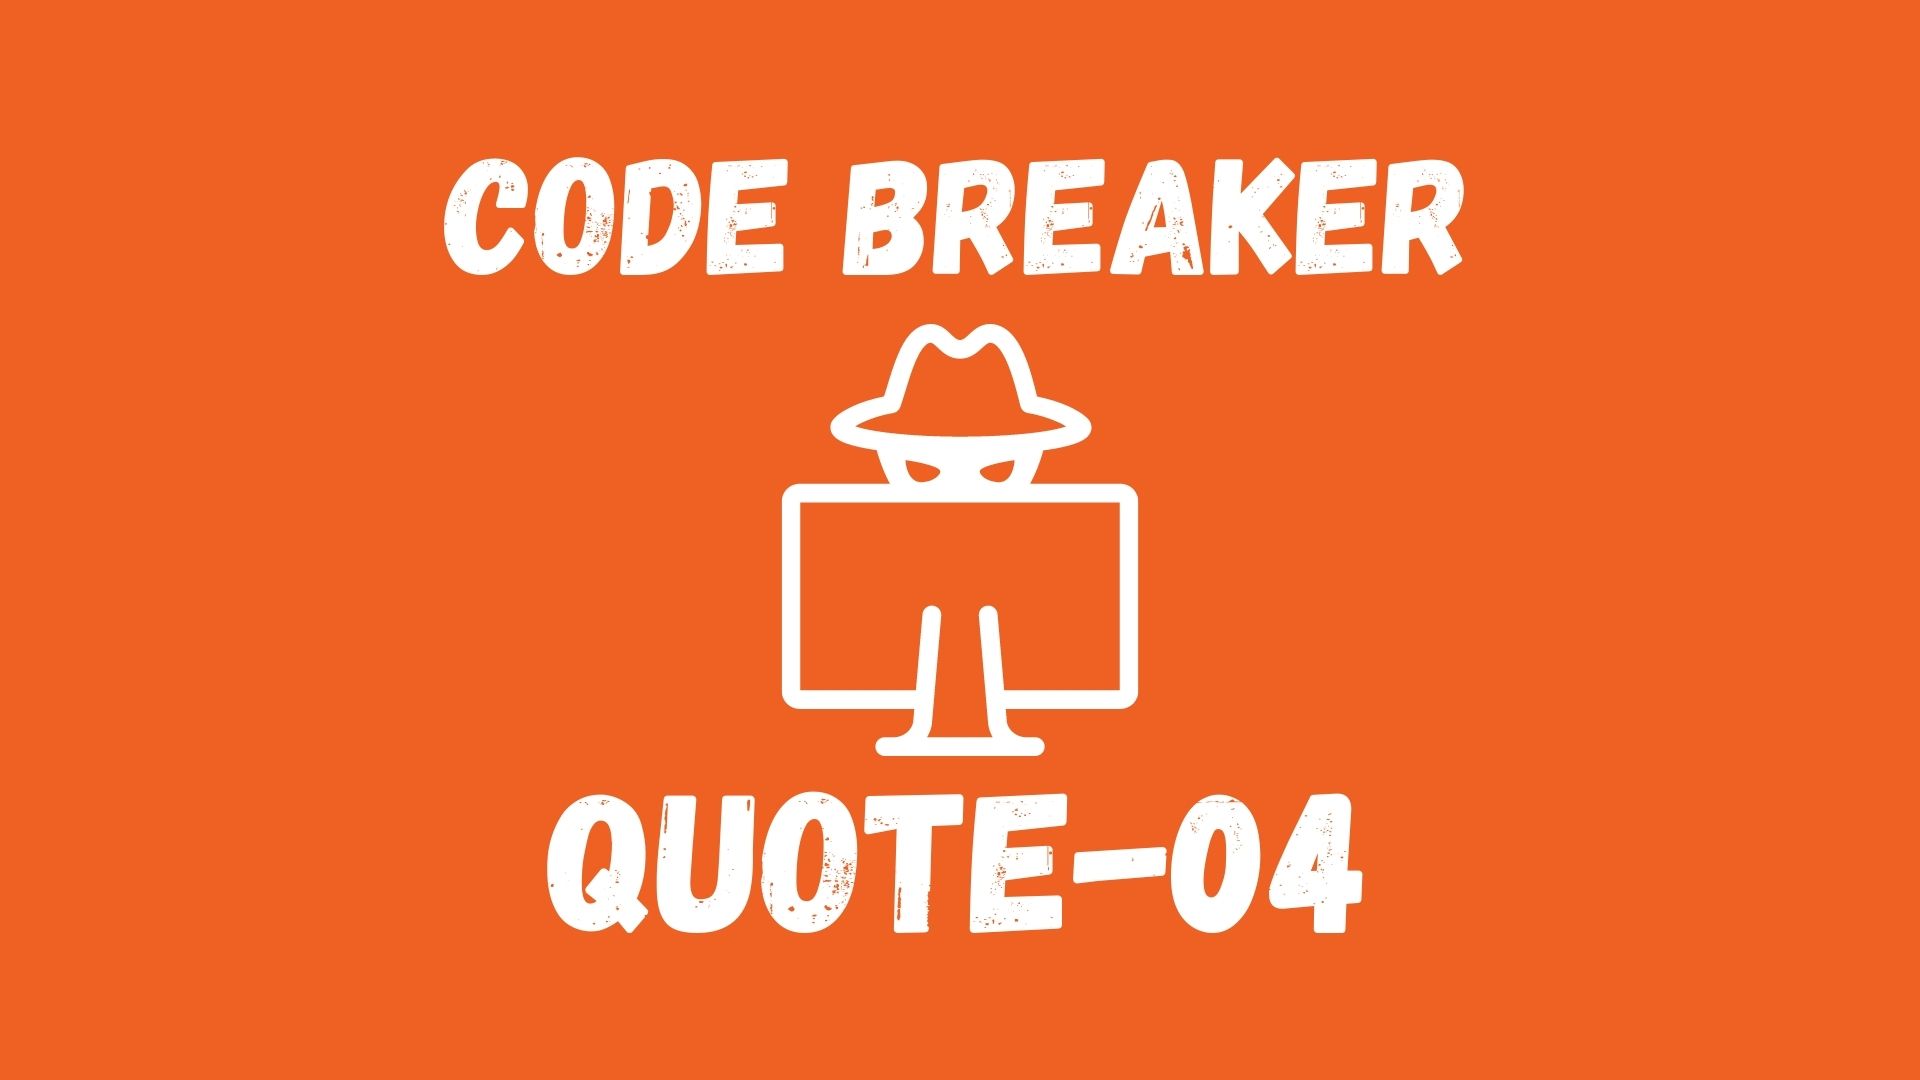 Code Breaker Decipher the Quote 04